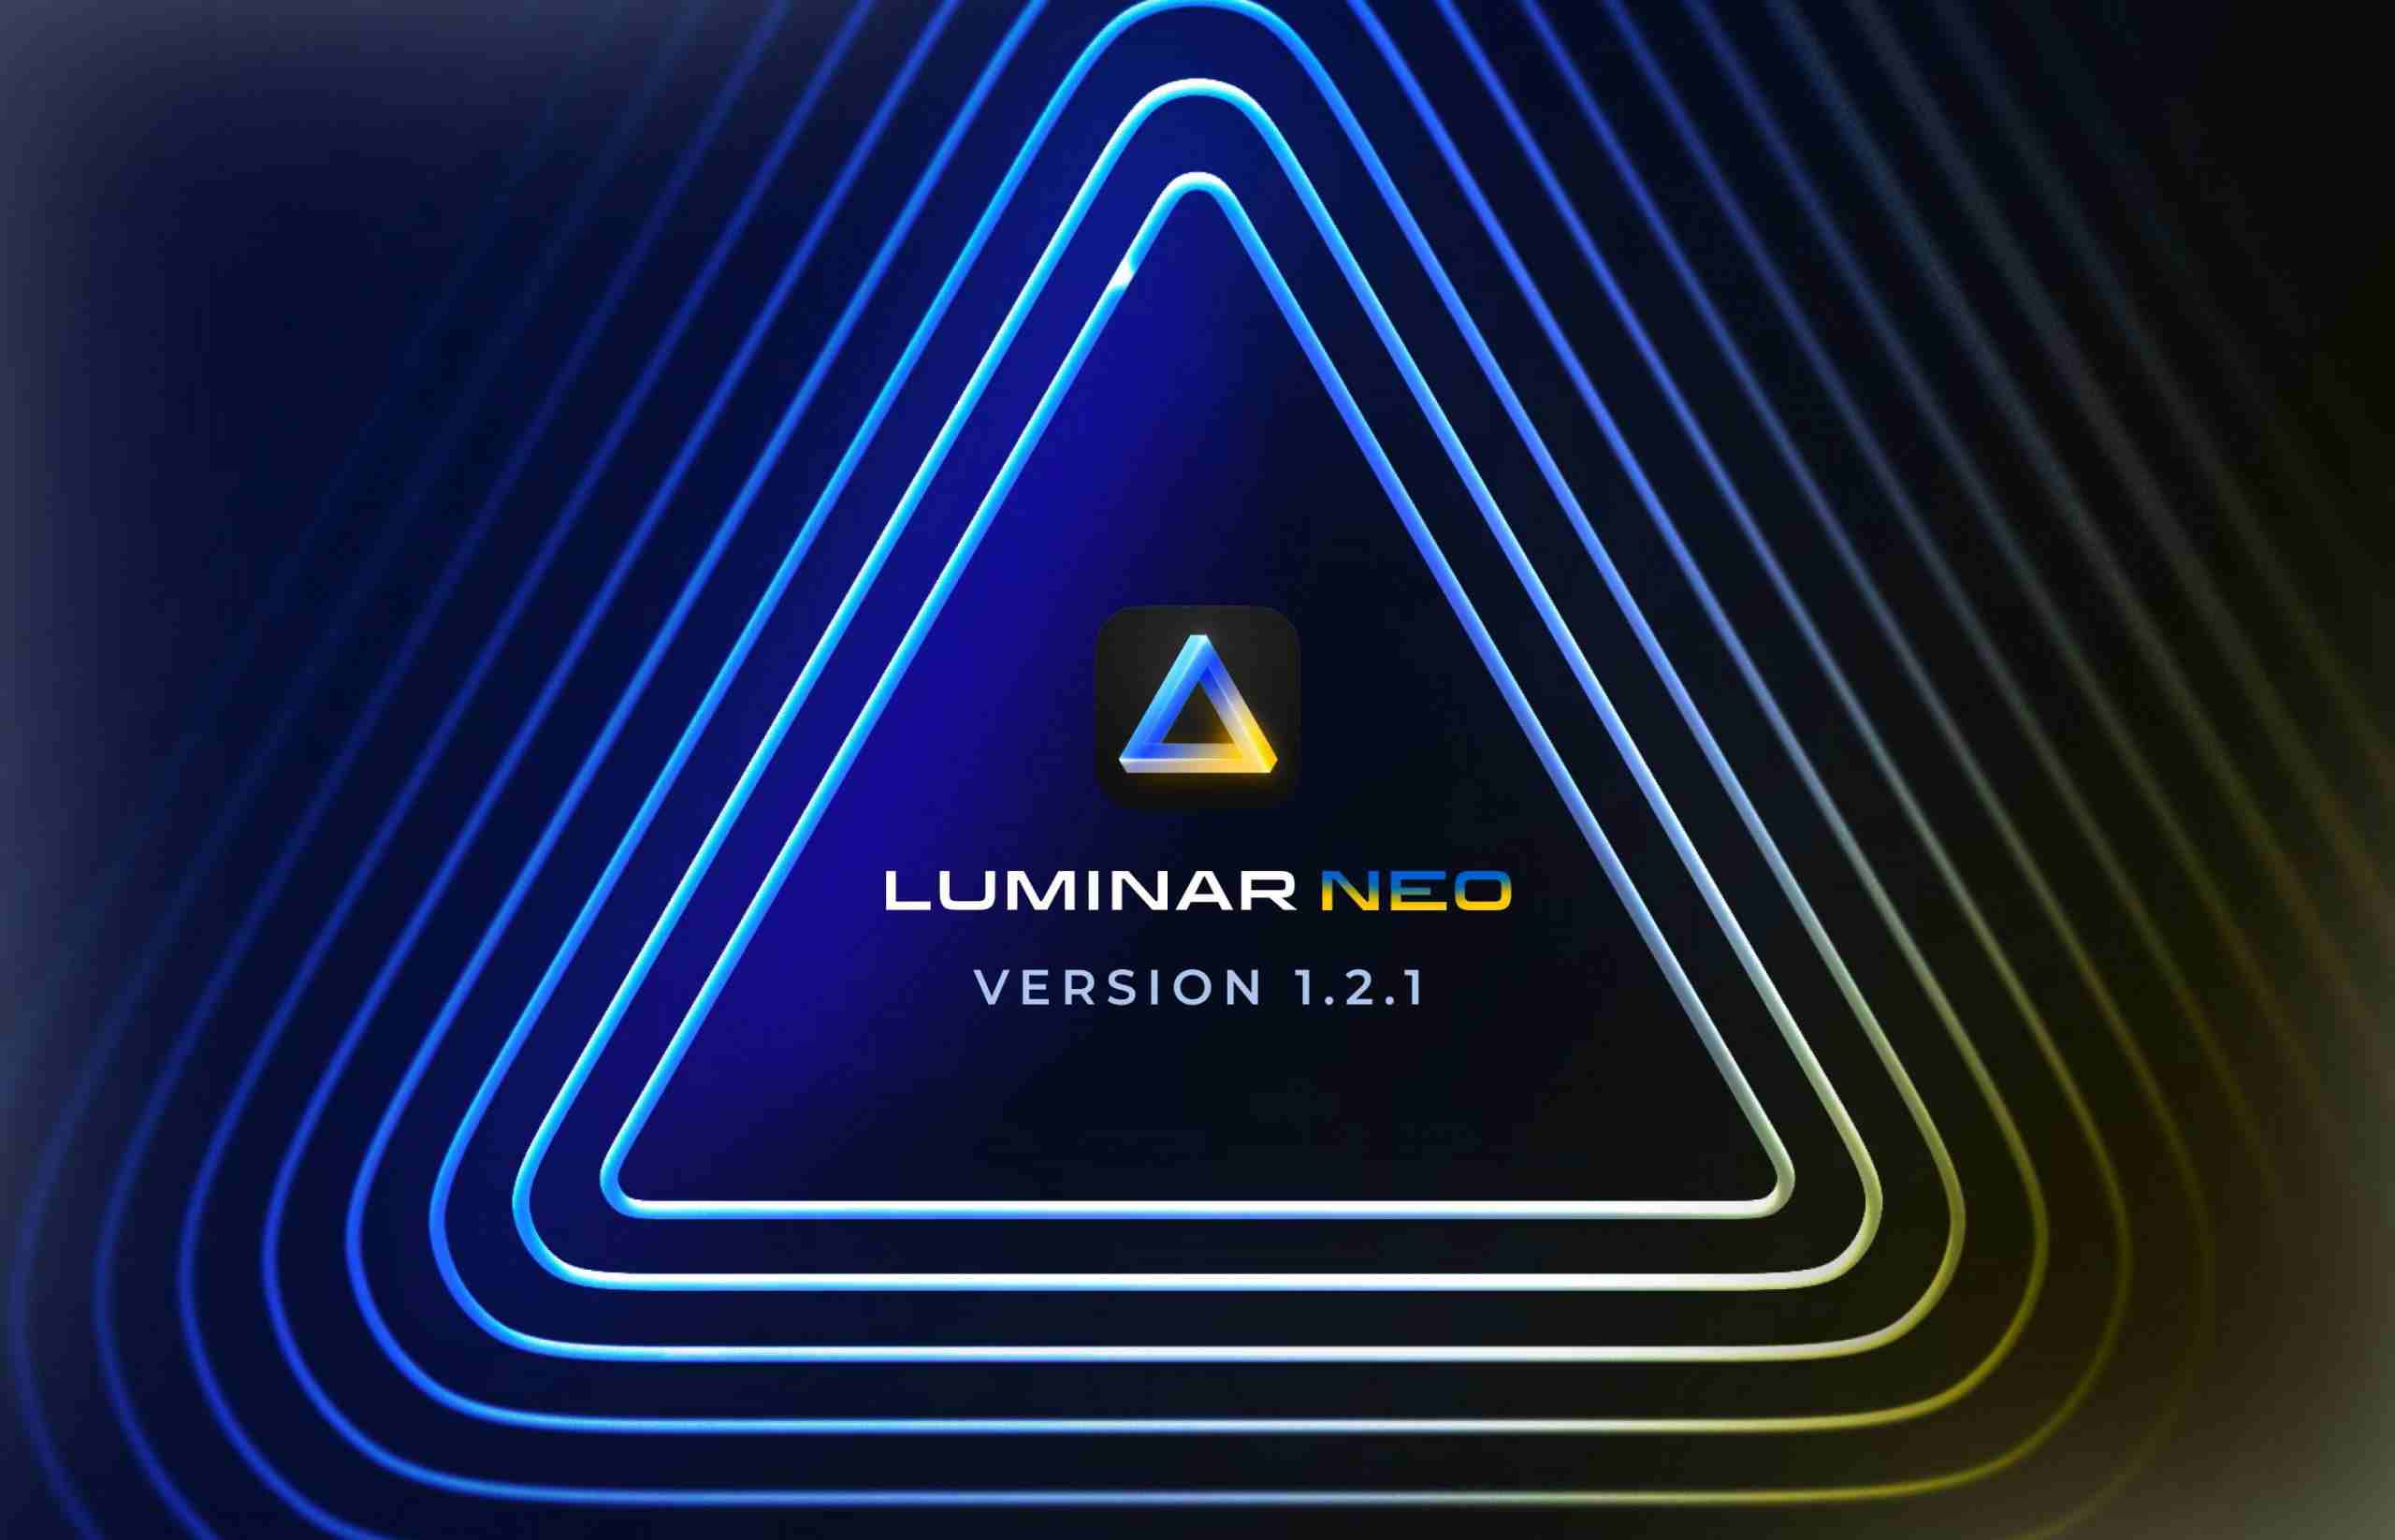 Skylum launch Luminar Neo 1.2.1 as a bug release